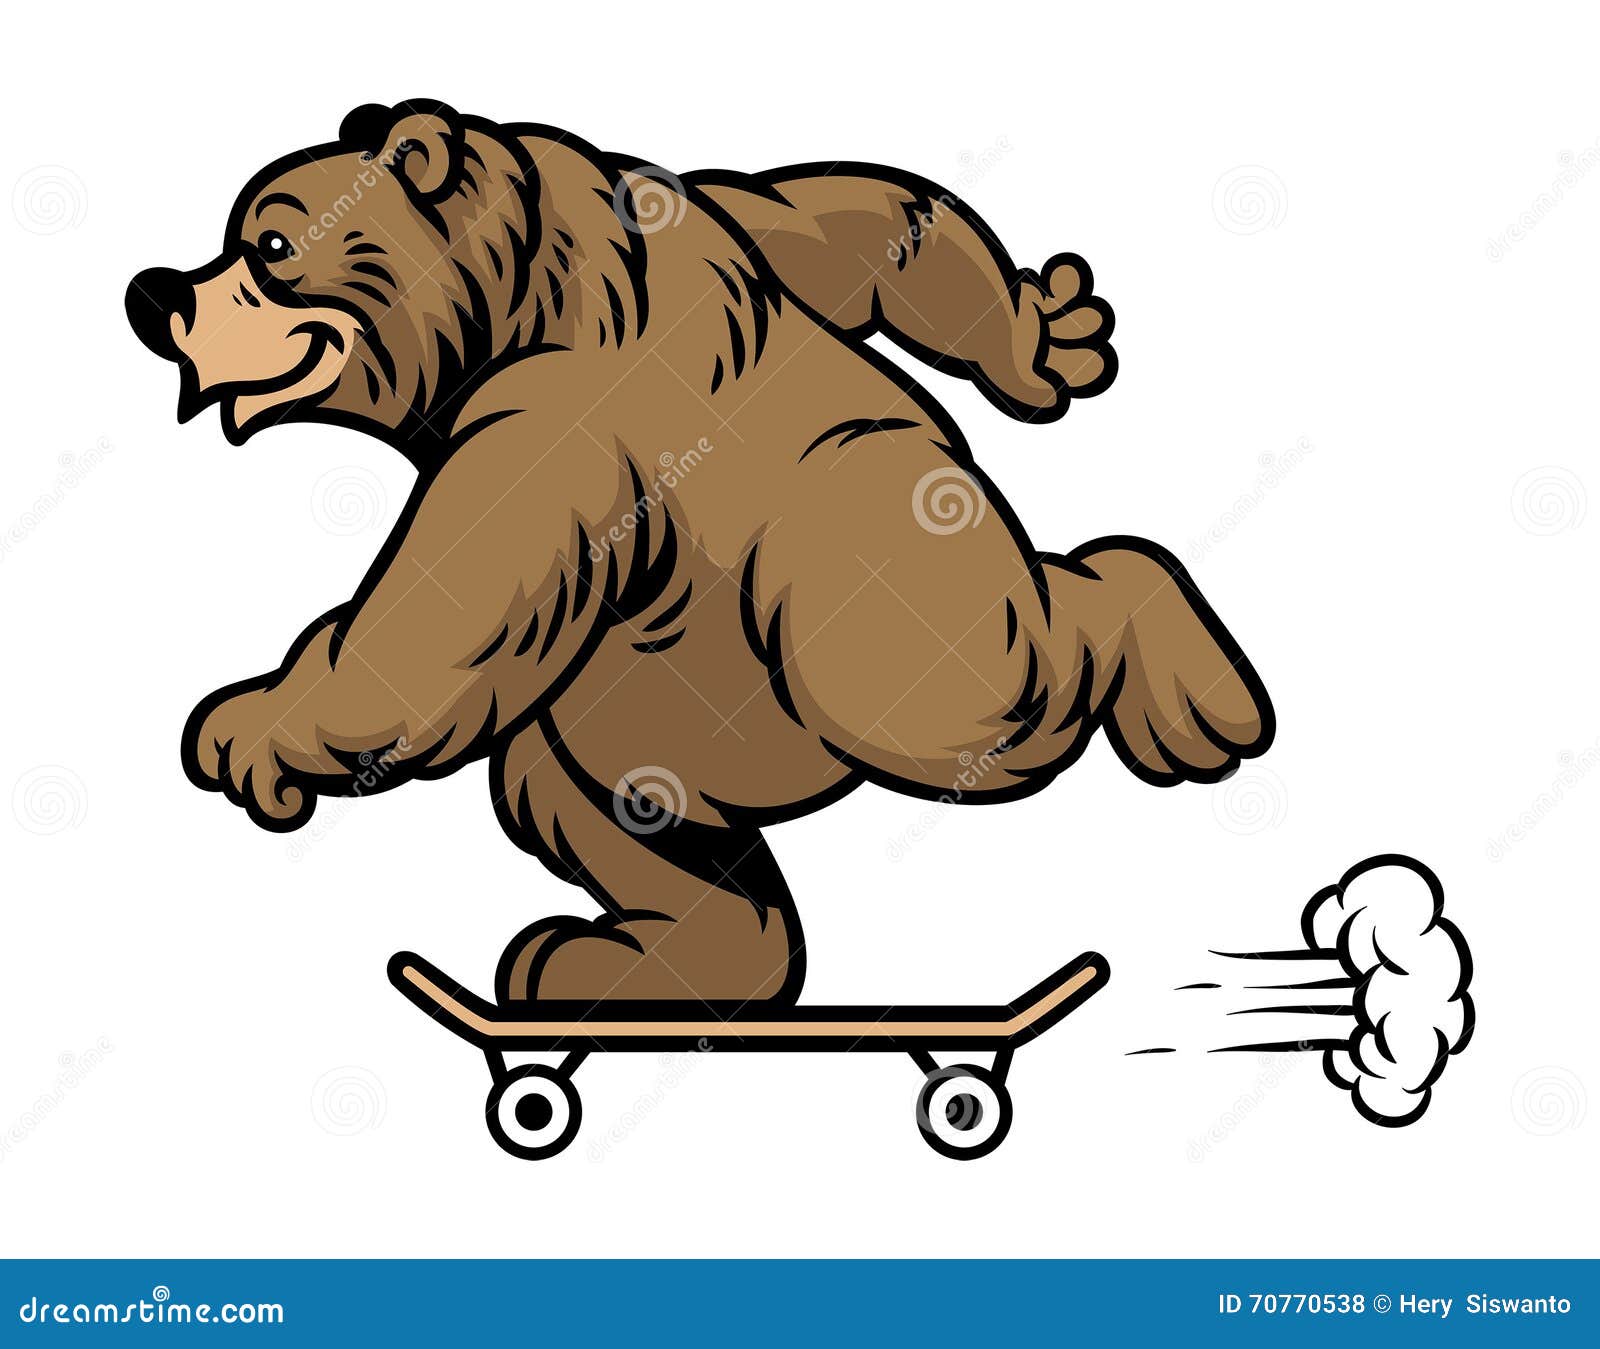 grizzly bear riding skateboard